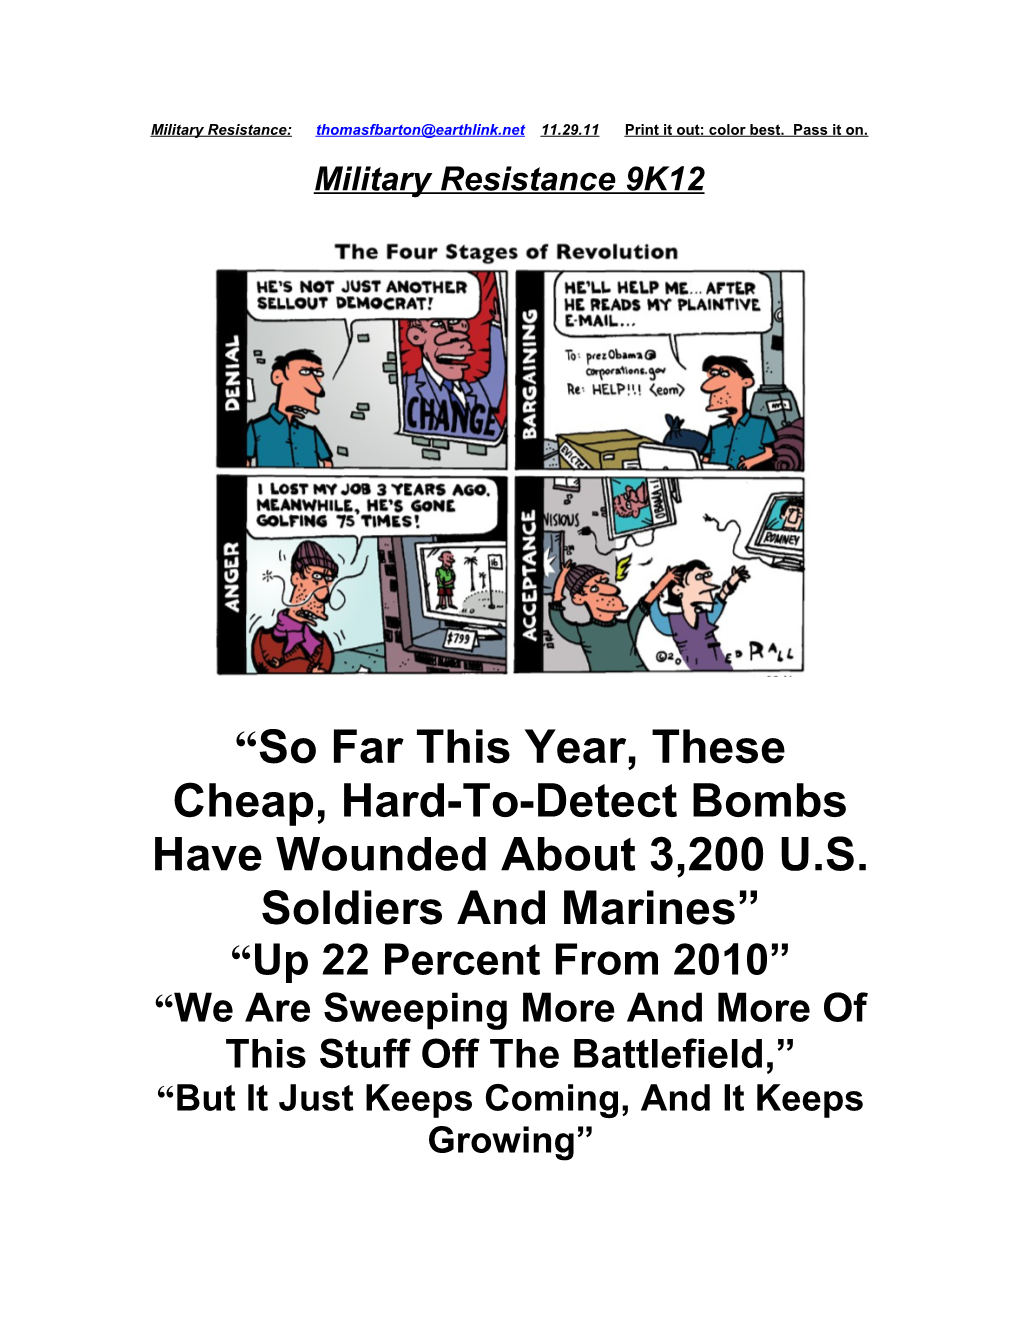 Military Resistance 9K12